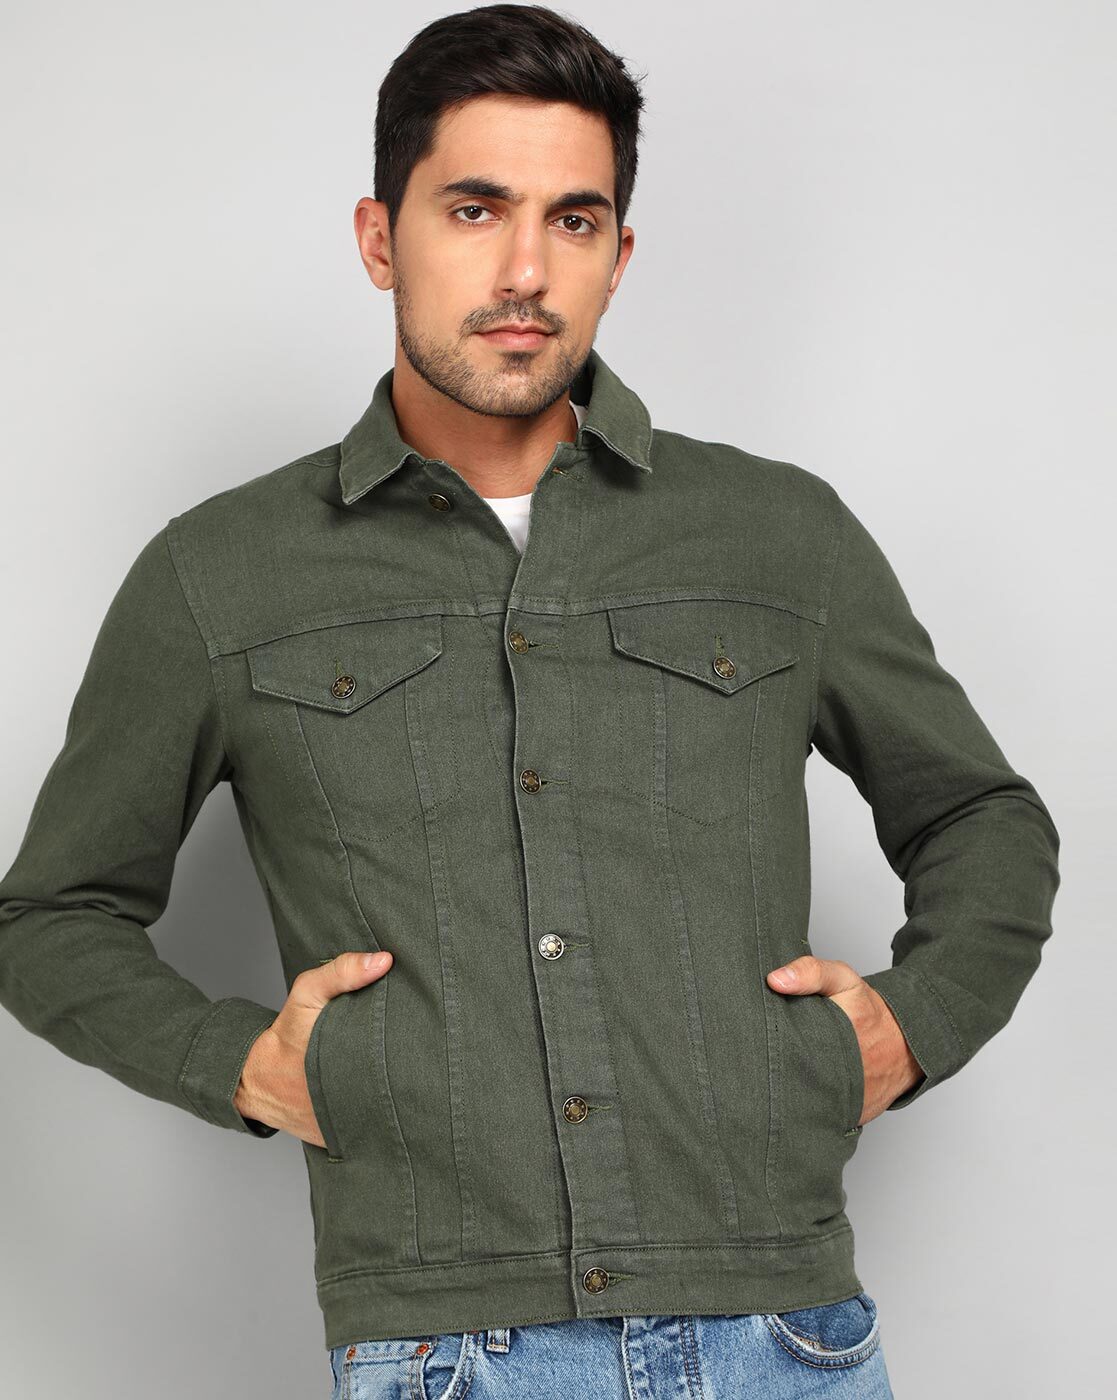 Men's Hooded Denim Jacket Hip Hop Jeans Coat Casual Outerwear Hoodies Tops  | eBay